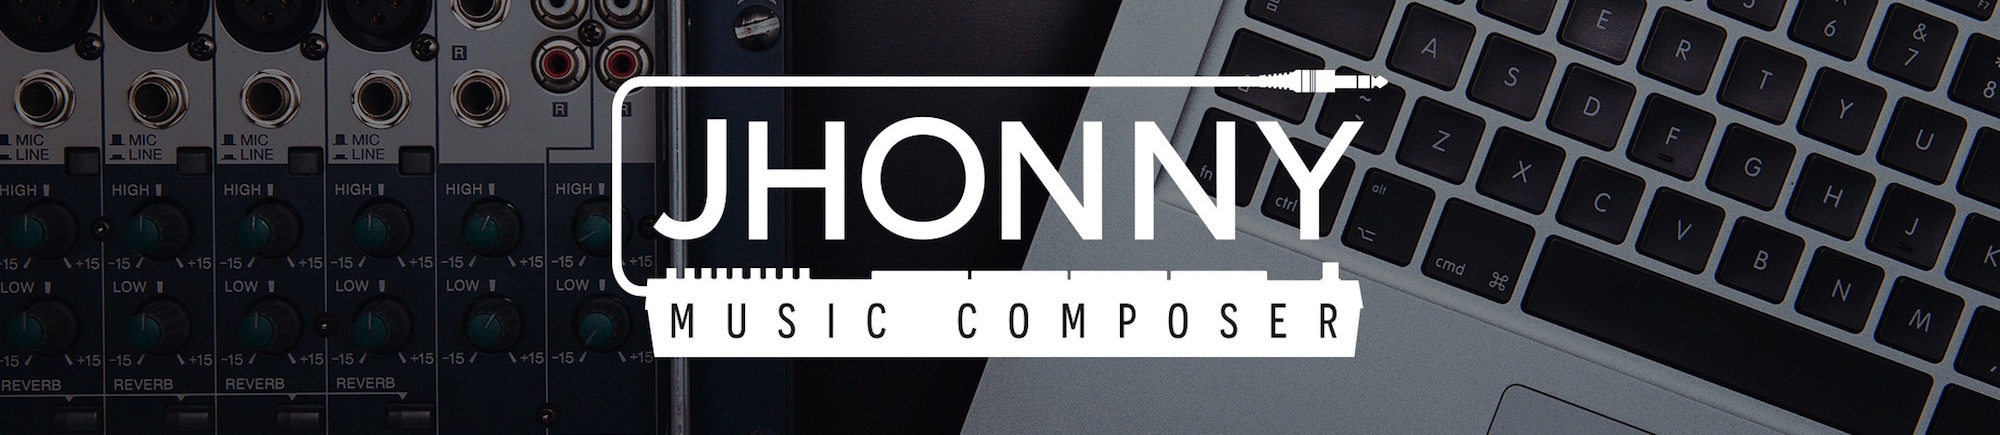 jhonnycomposer